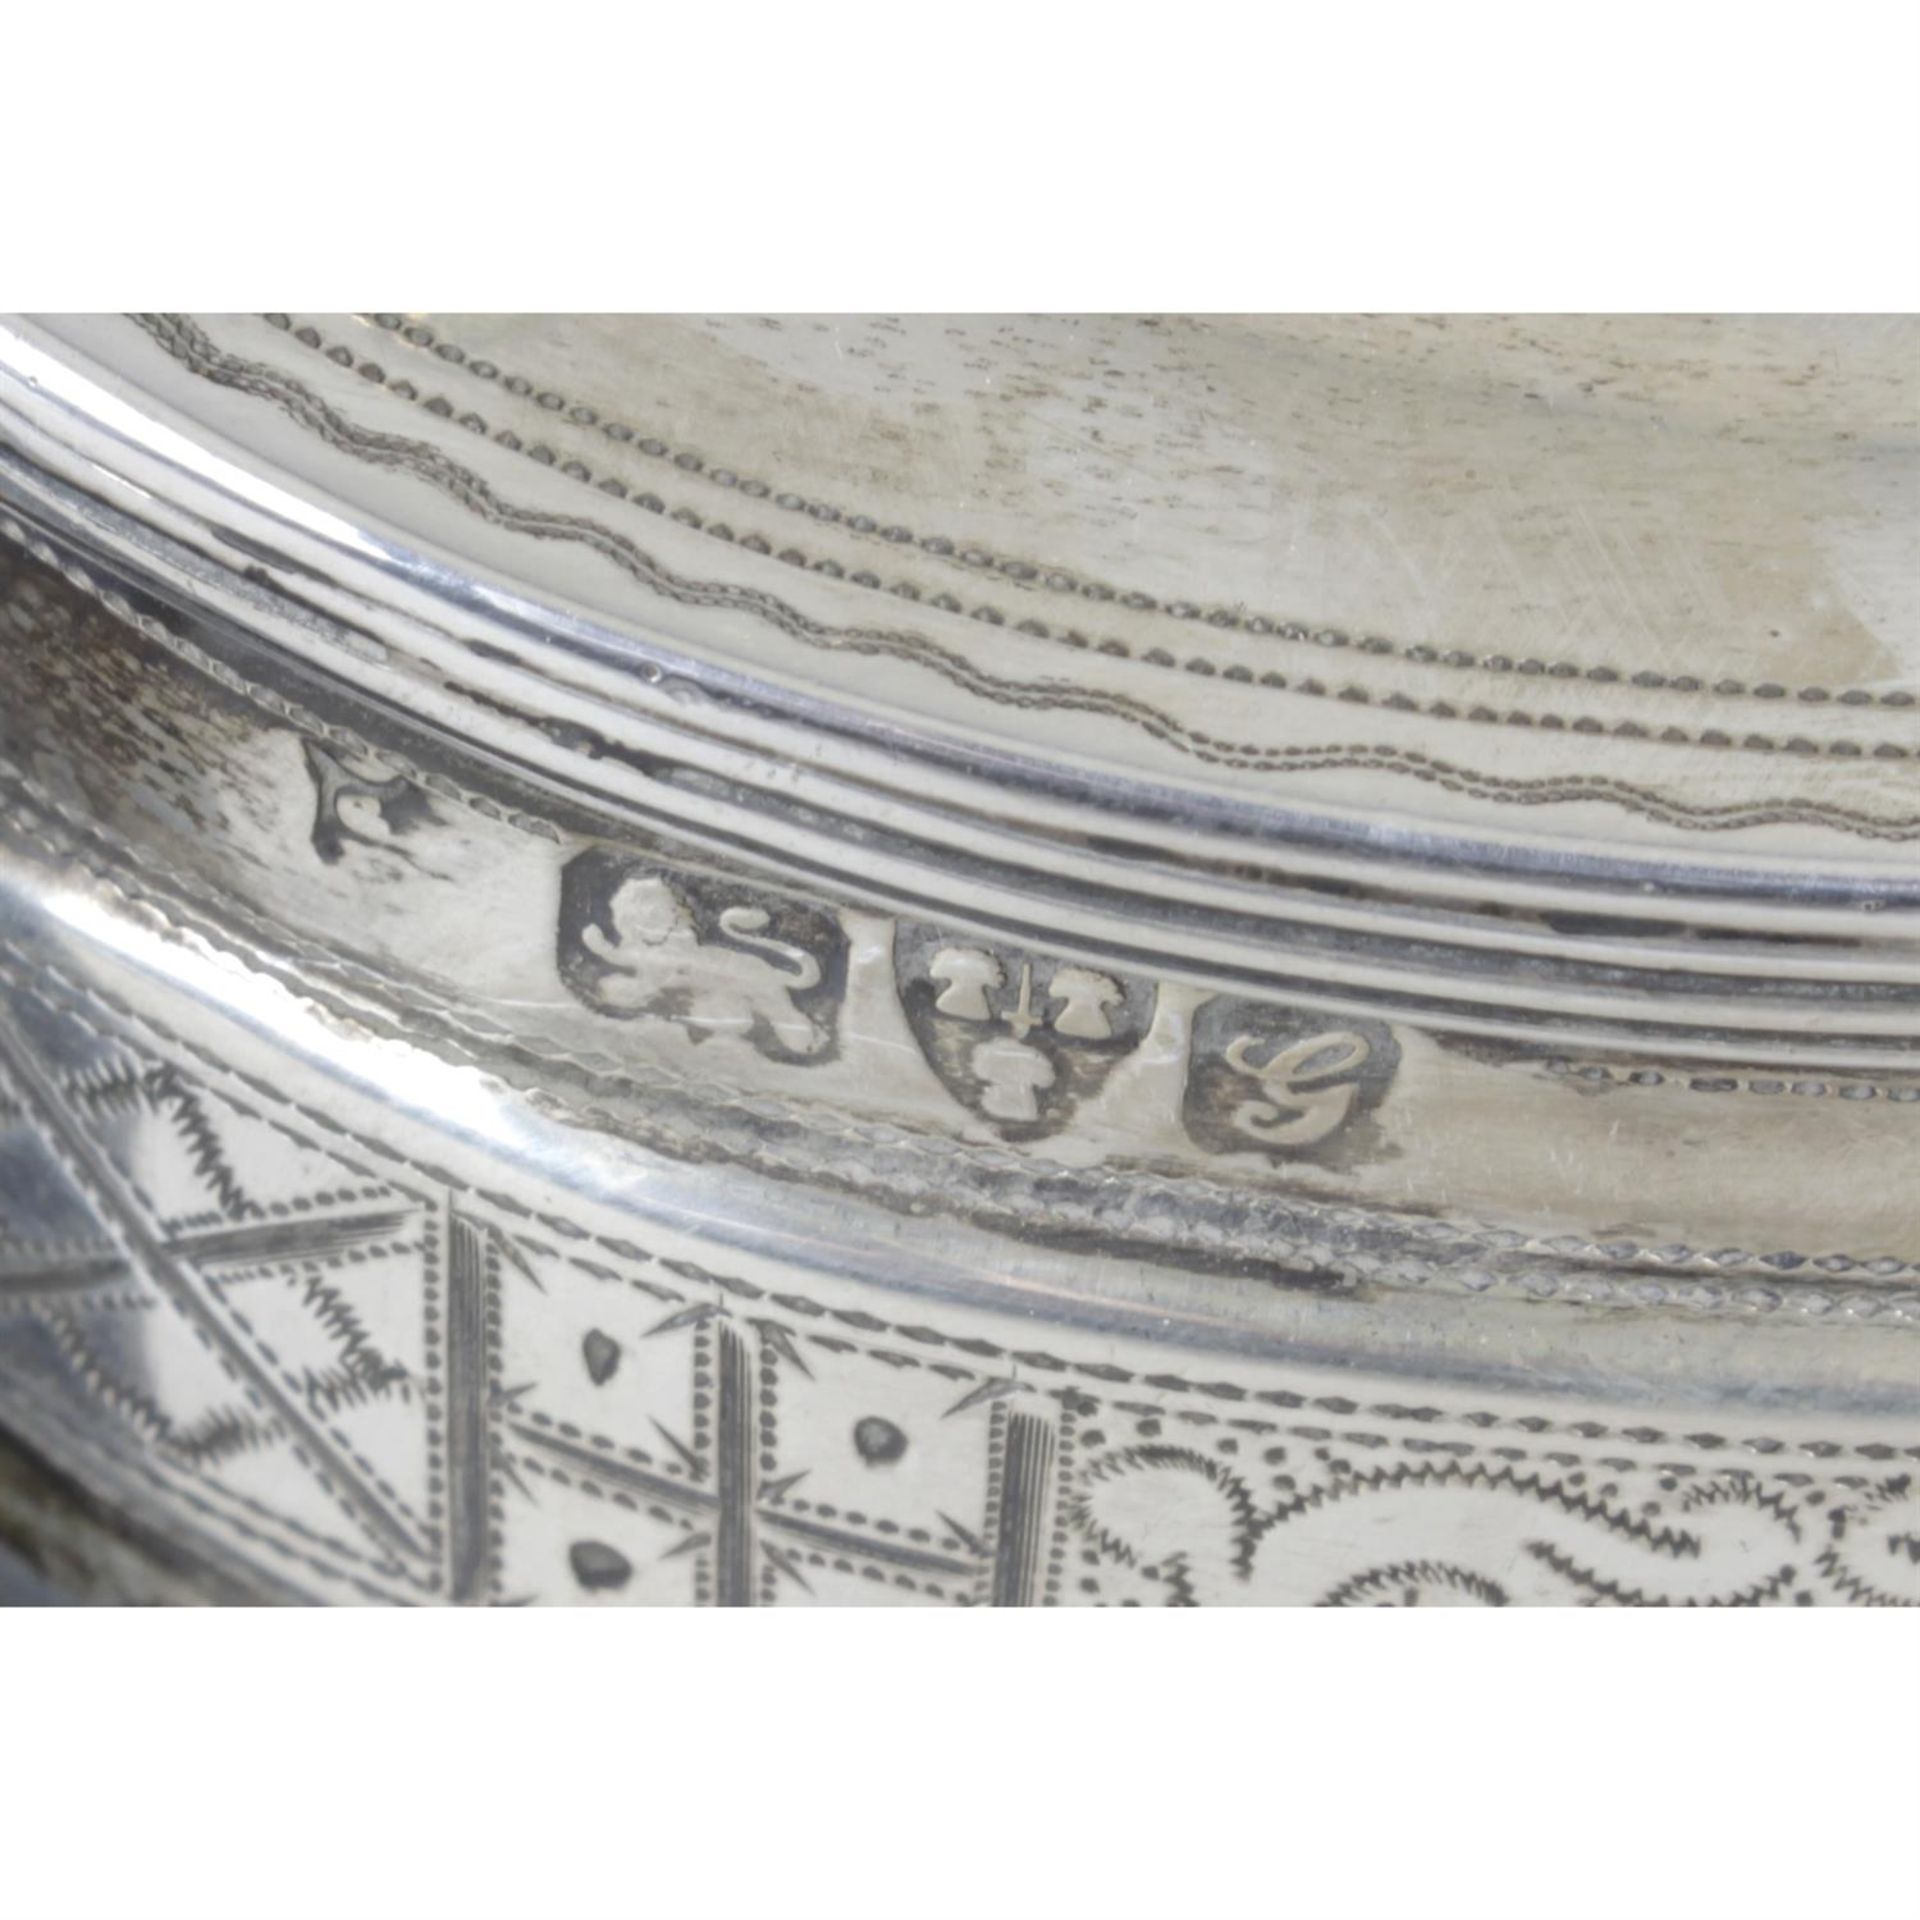 An Edwardian silver oval teapot in Georgian style. - Image 3 of 3